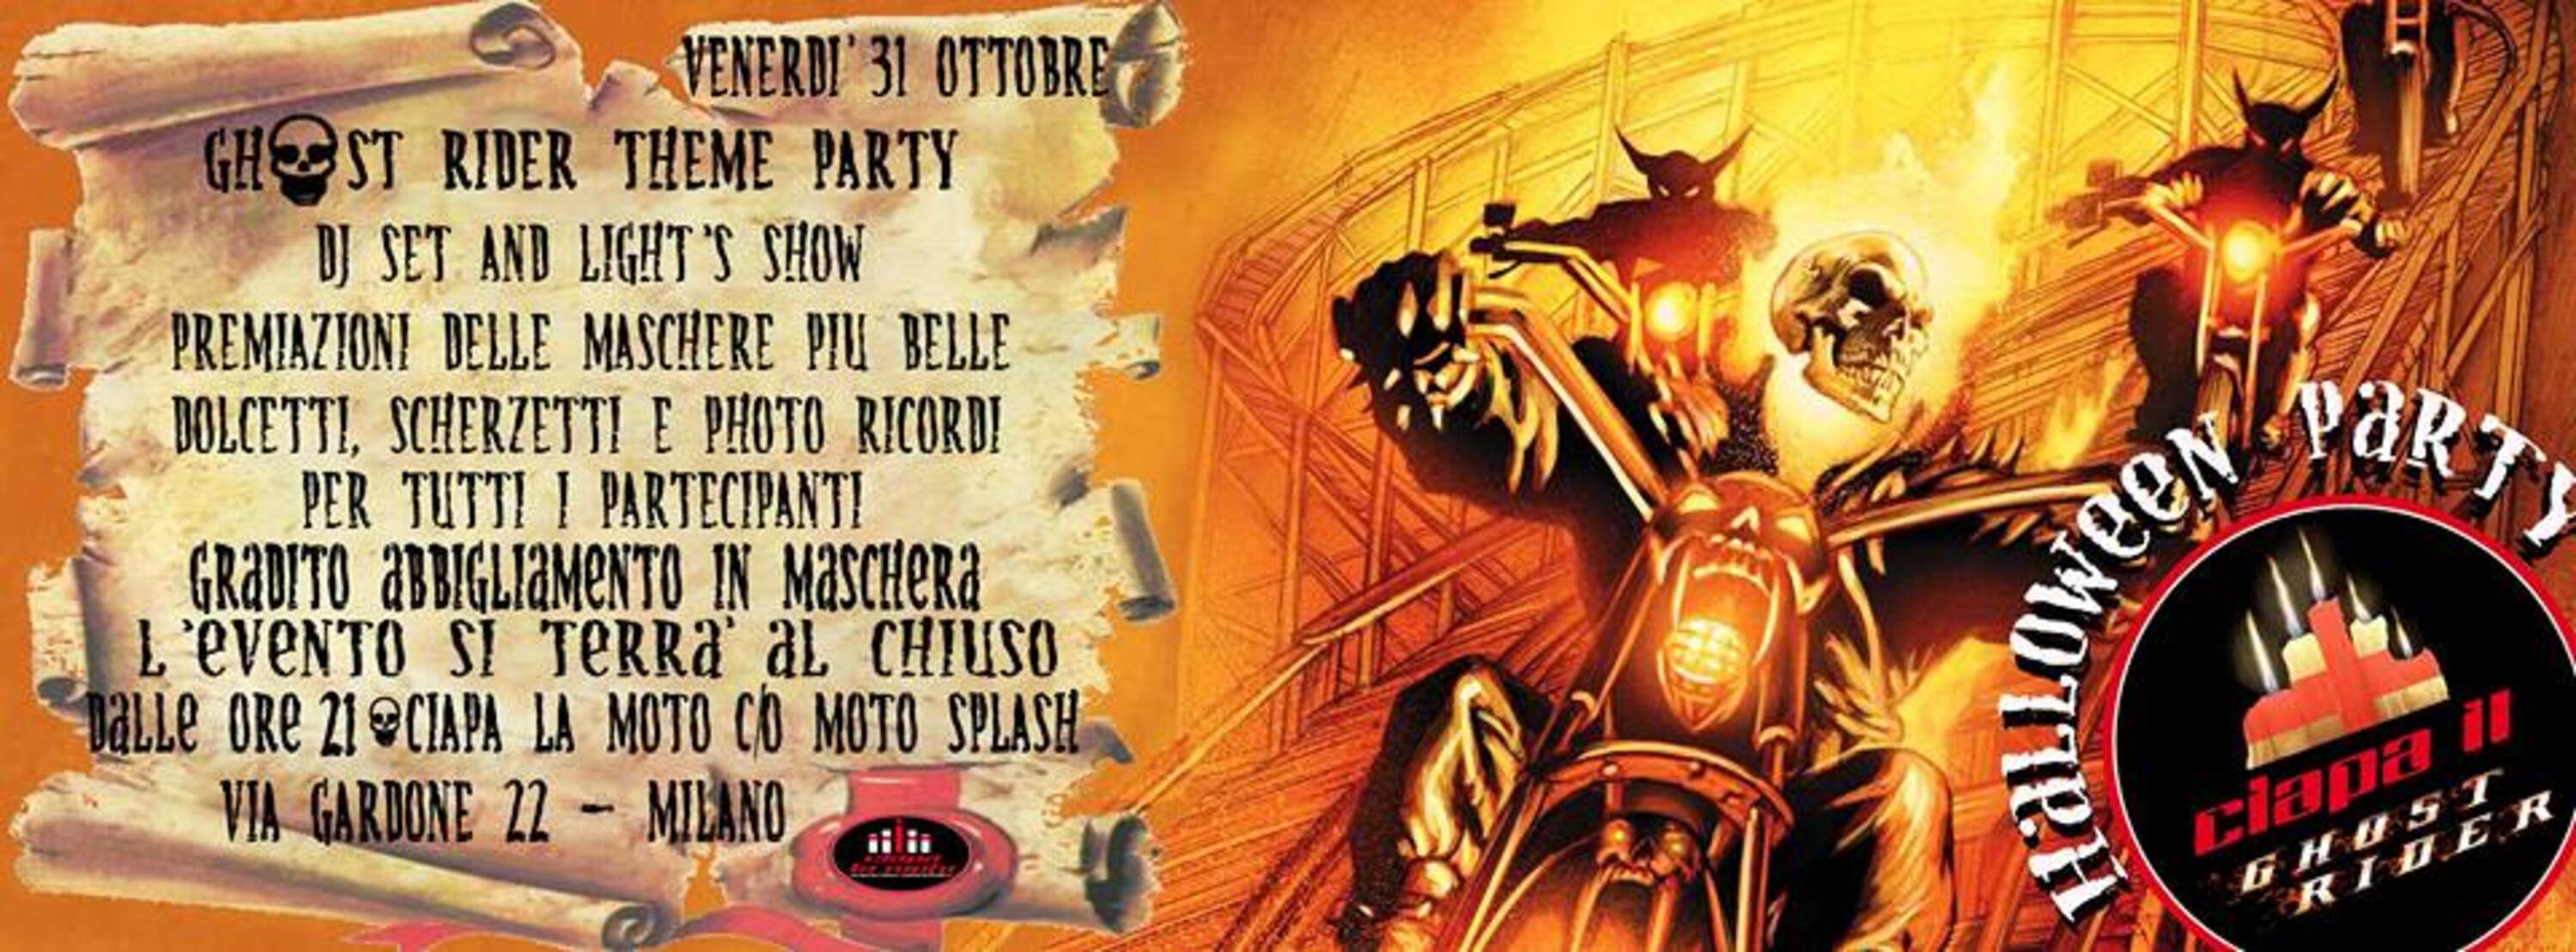  Halloween Party da Ciapa la moto, venerd&igrave; 31 ottobre